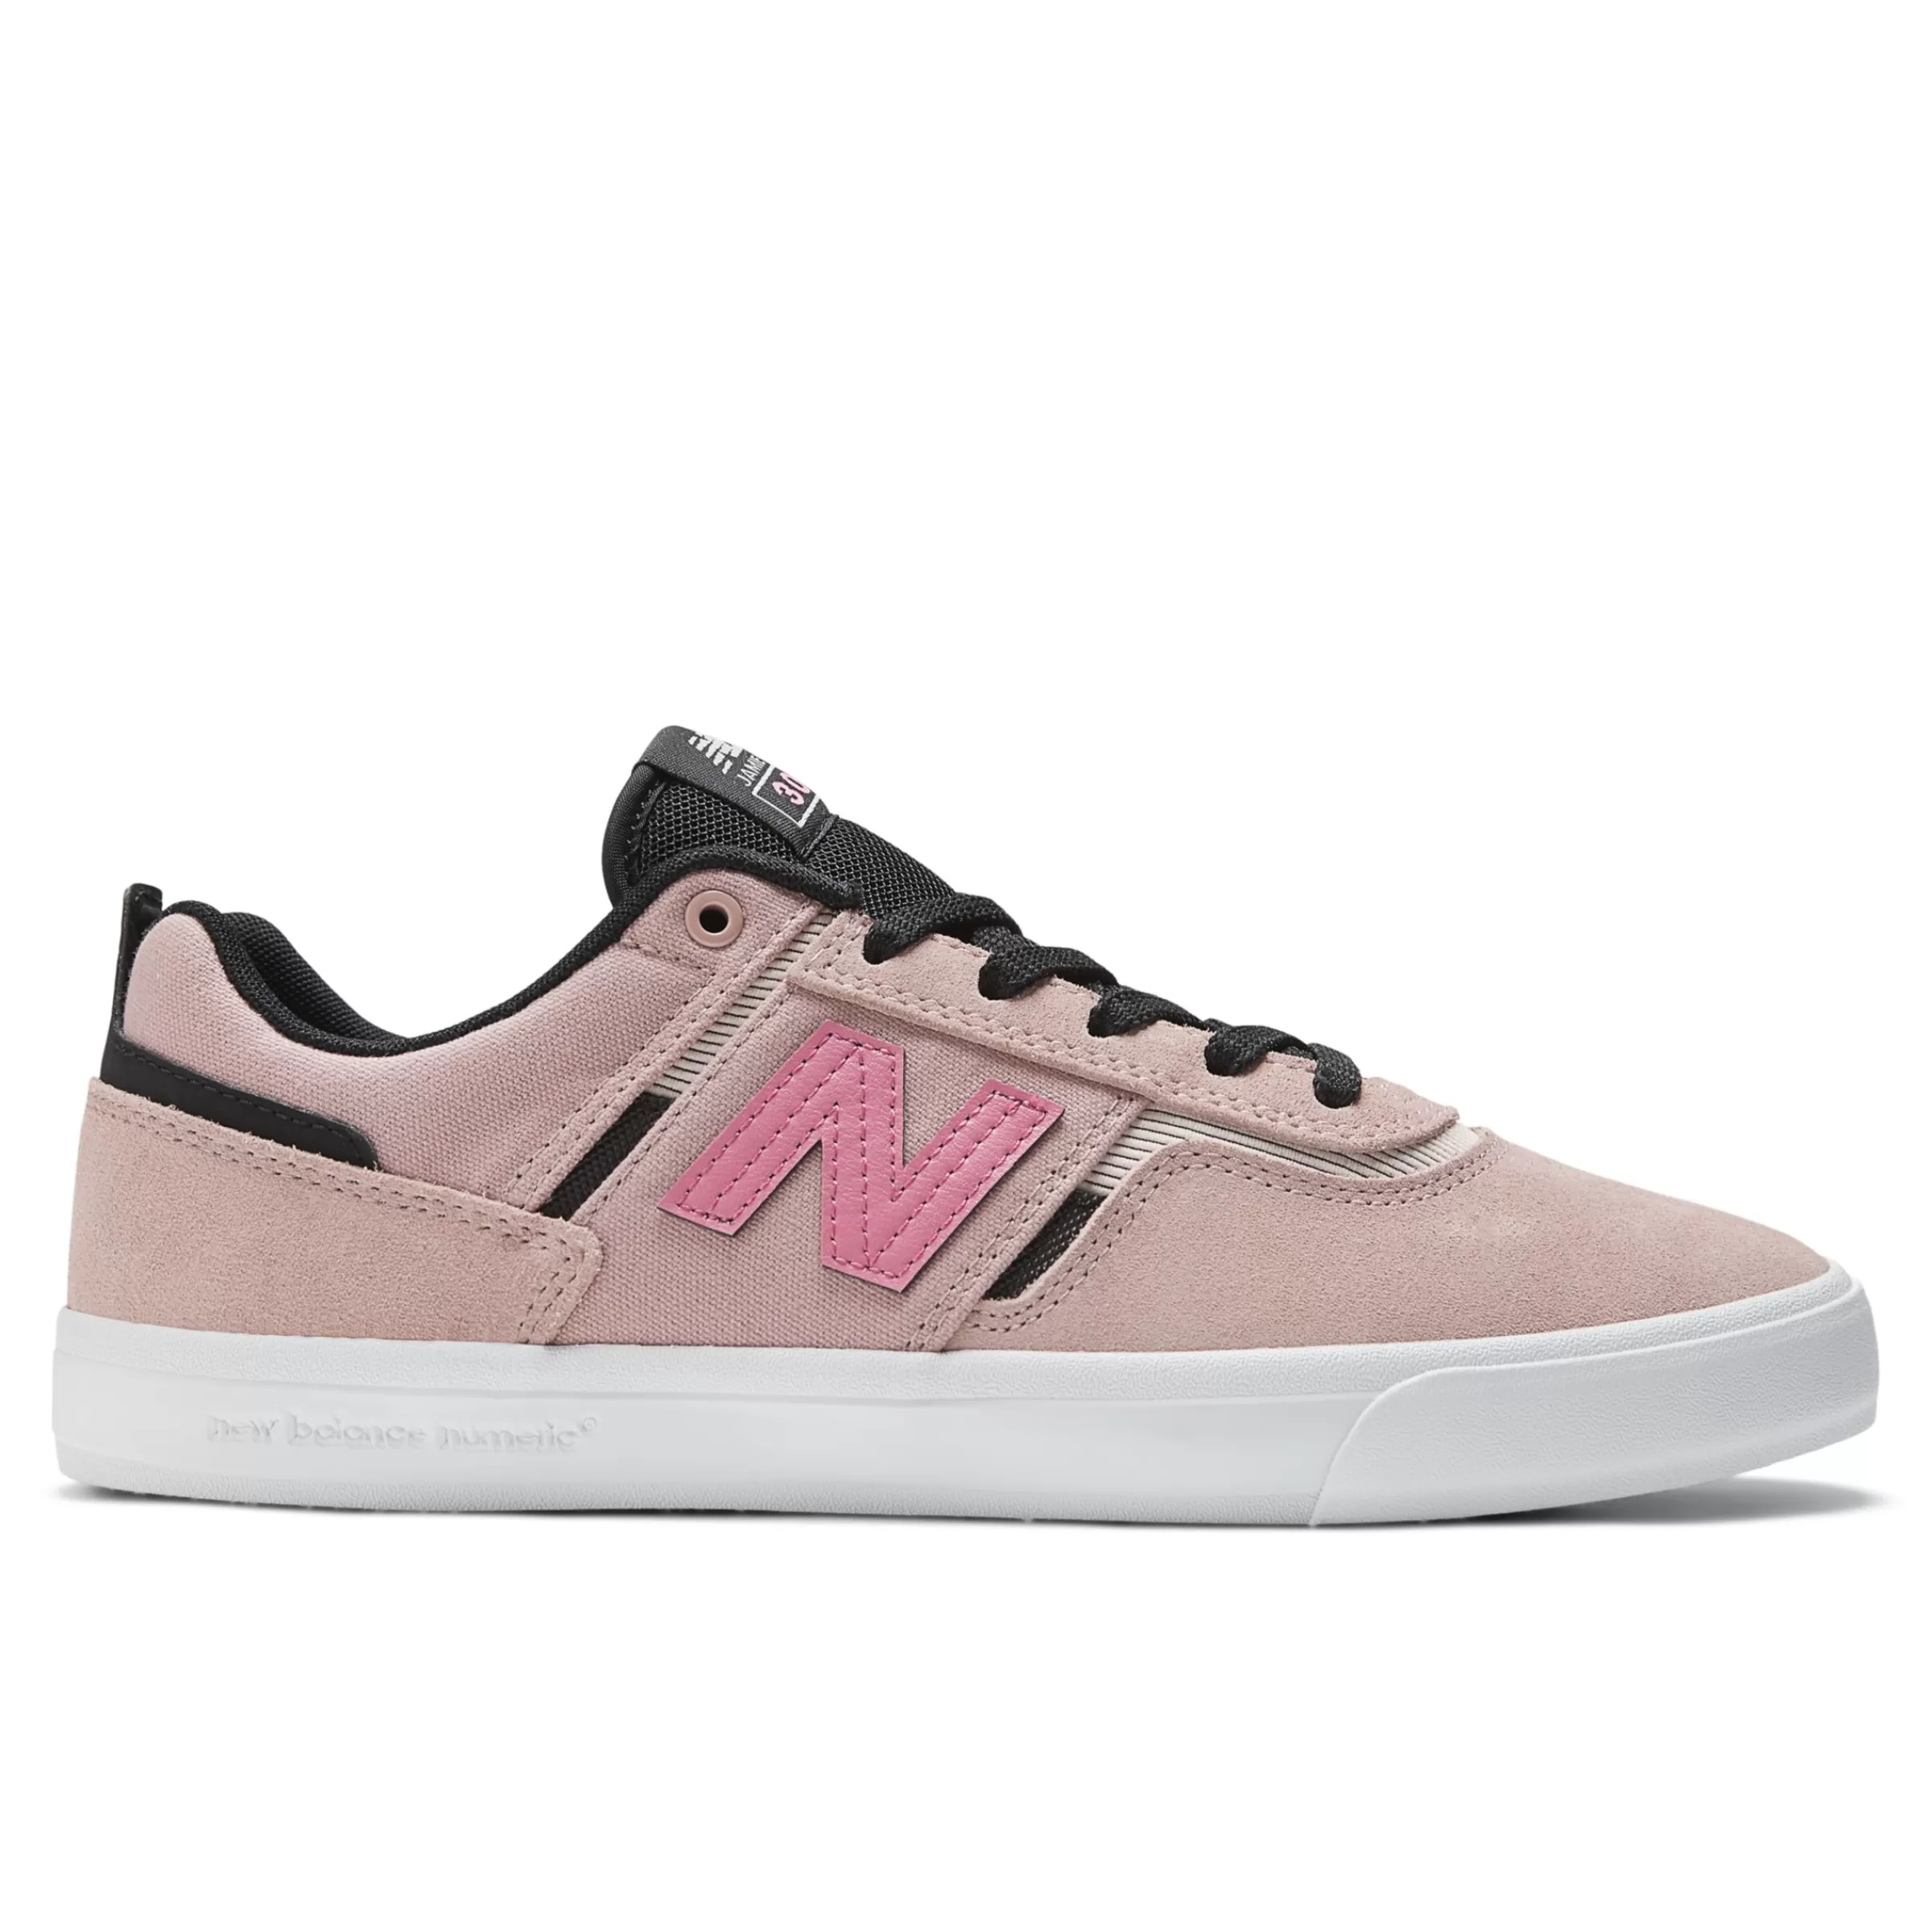 New Balance Chaussures Soldes-NBNumericJamieFoy306 Pink avec Black